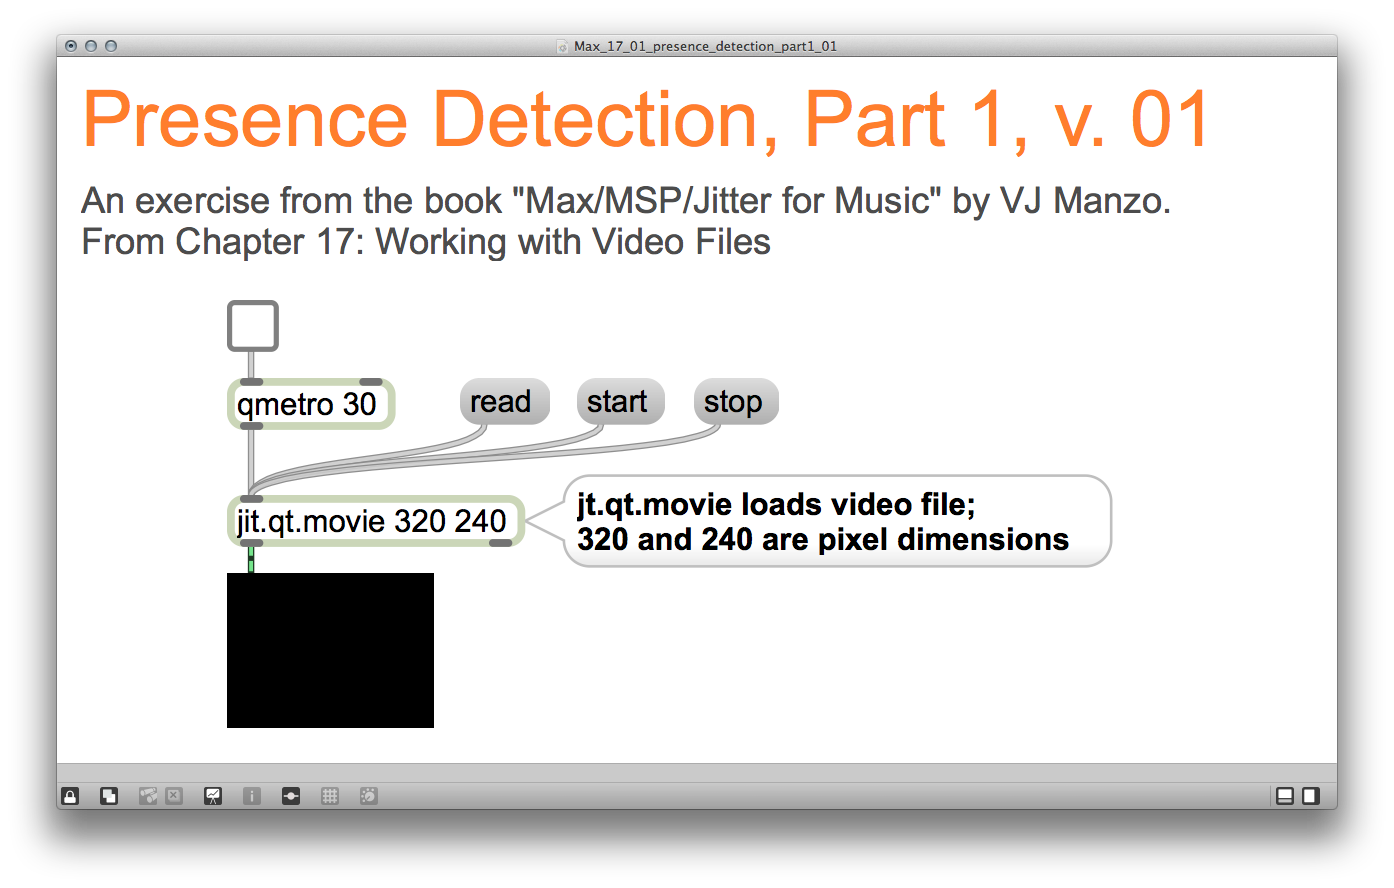 max_17_01_presence_detection_part1_01.png